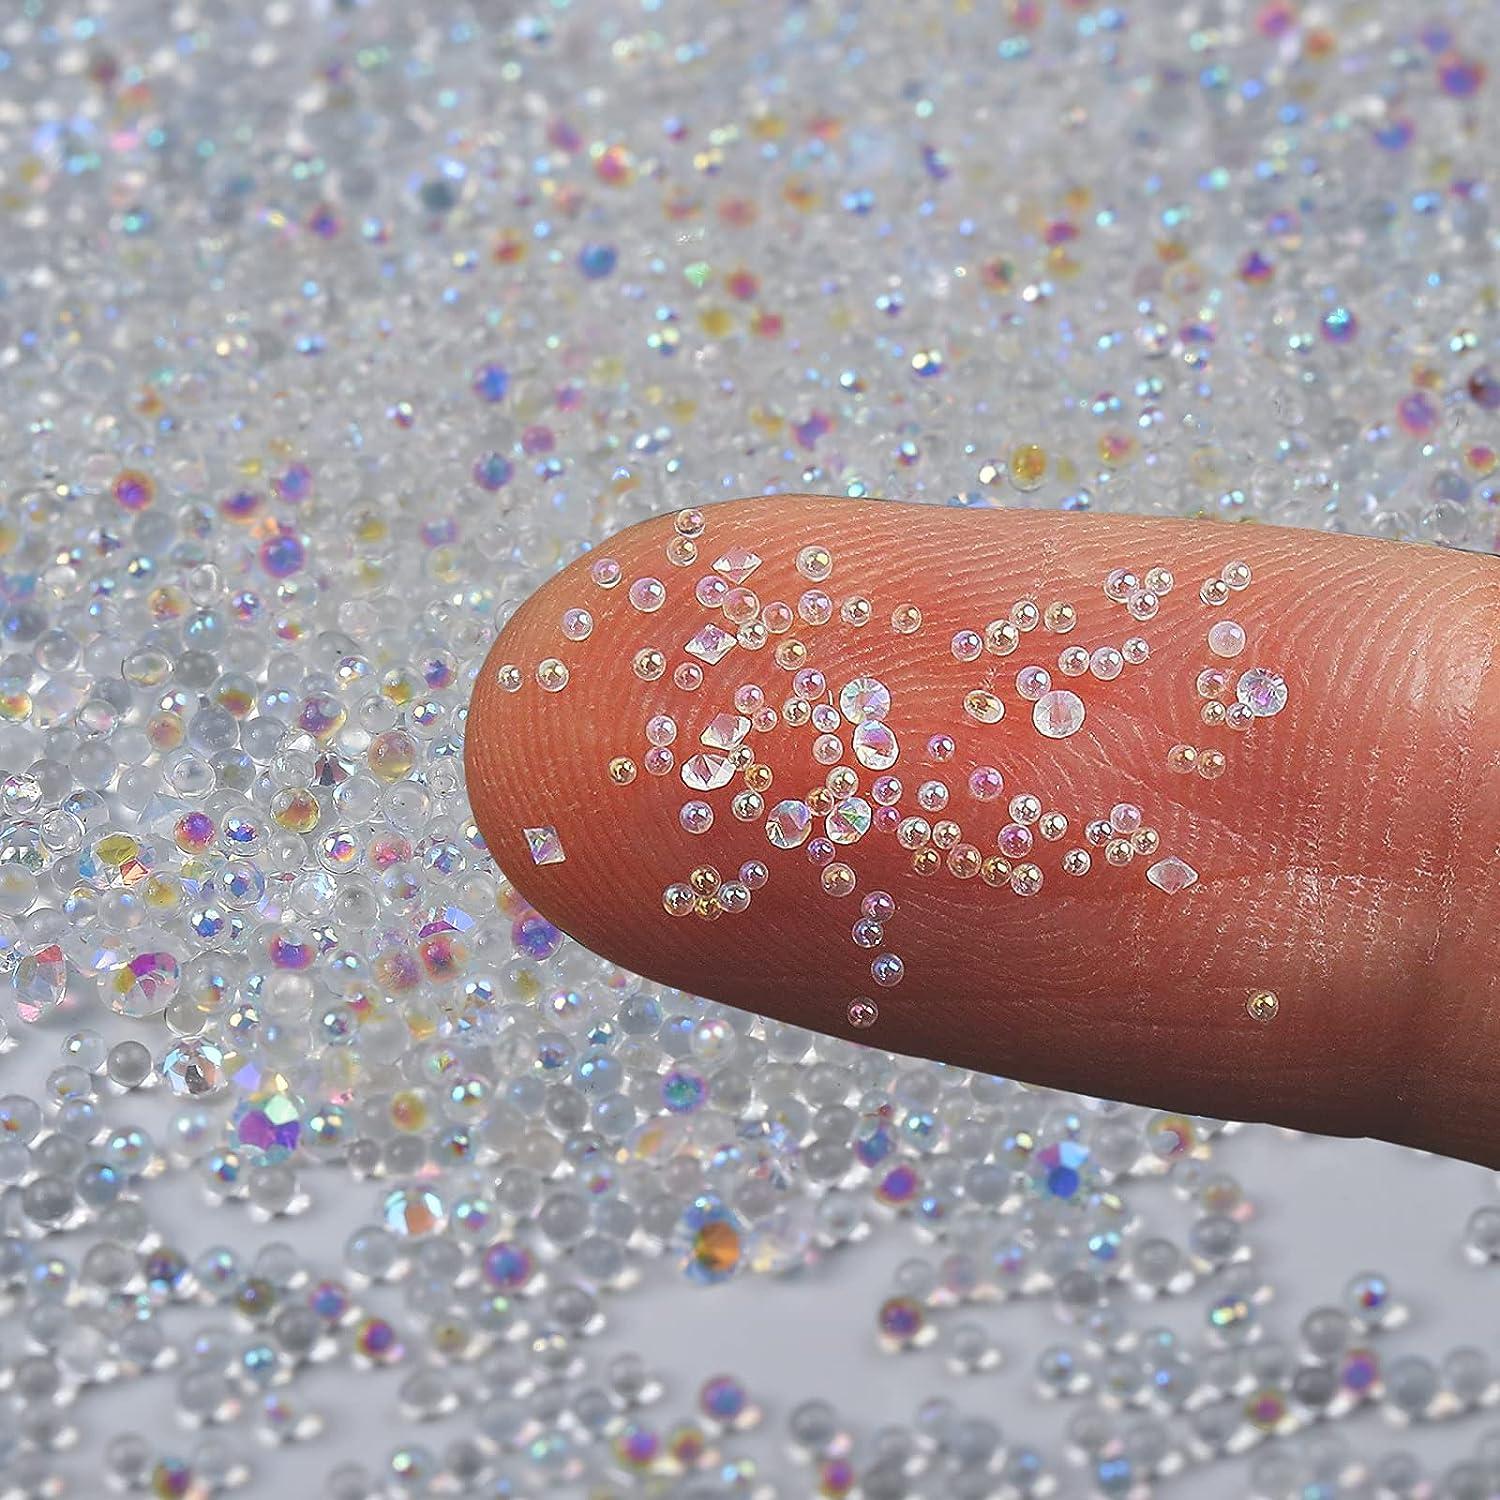 8000pcs Ultra Mini 1.2mm Nail Rhinestones Sand Diamonds Micro Pixie Crystals for Nails Iridescent AB Bling Like Swarovski, Tiny Nail Gems Sugar